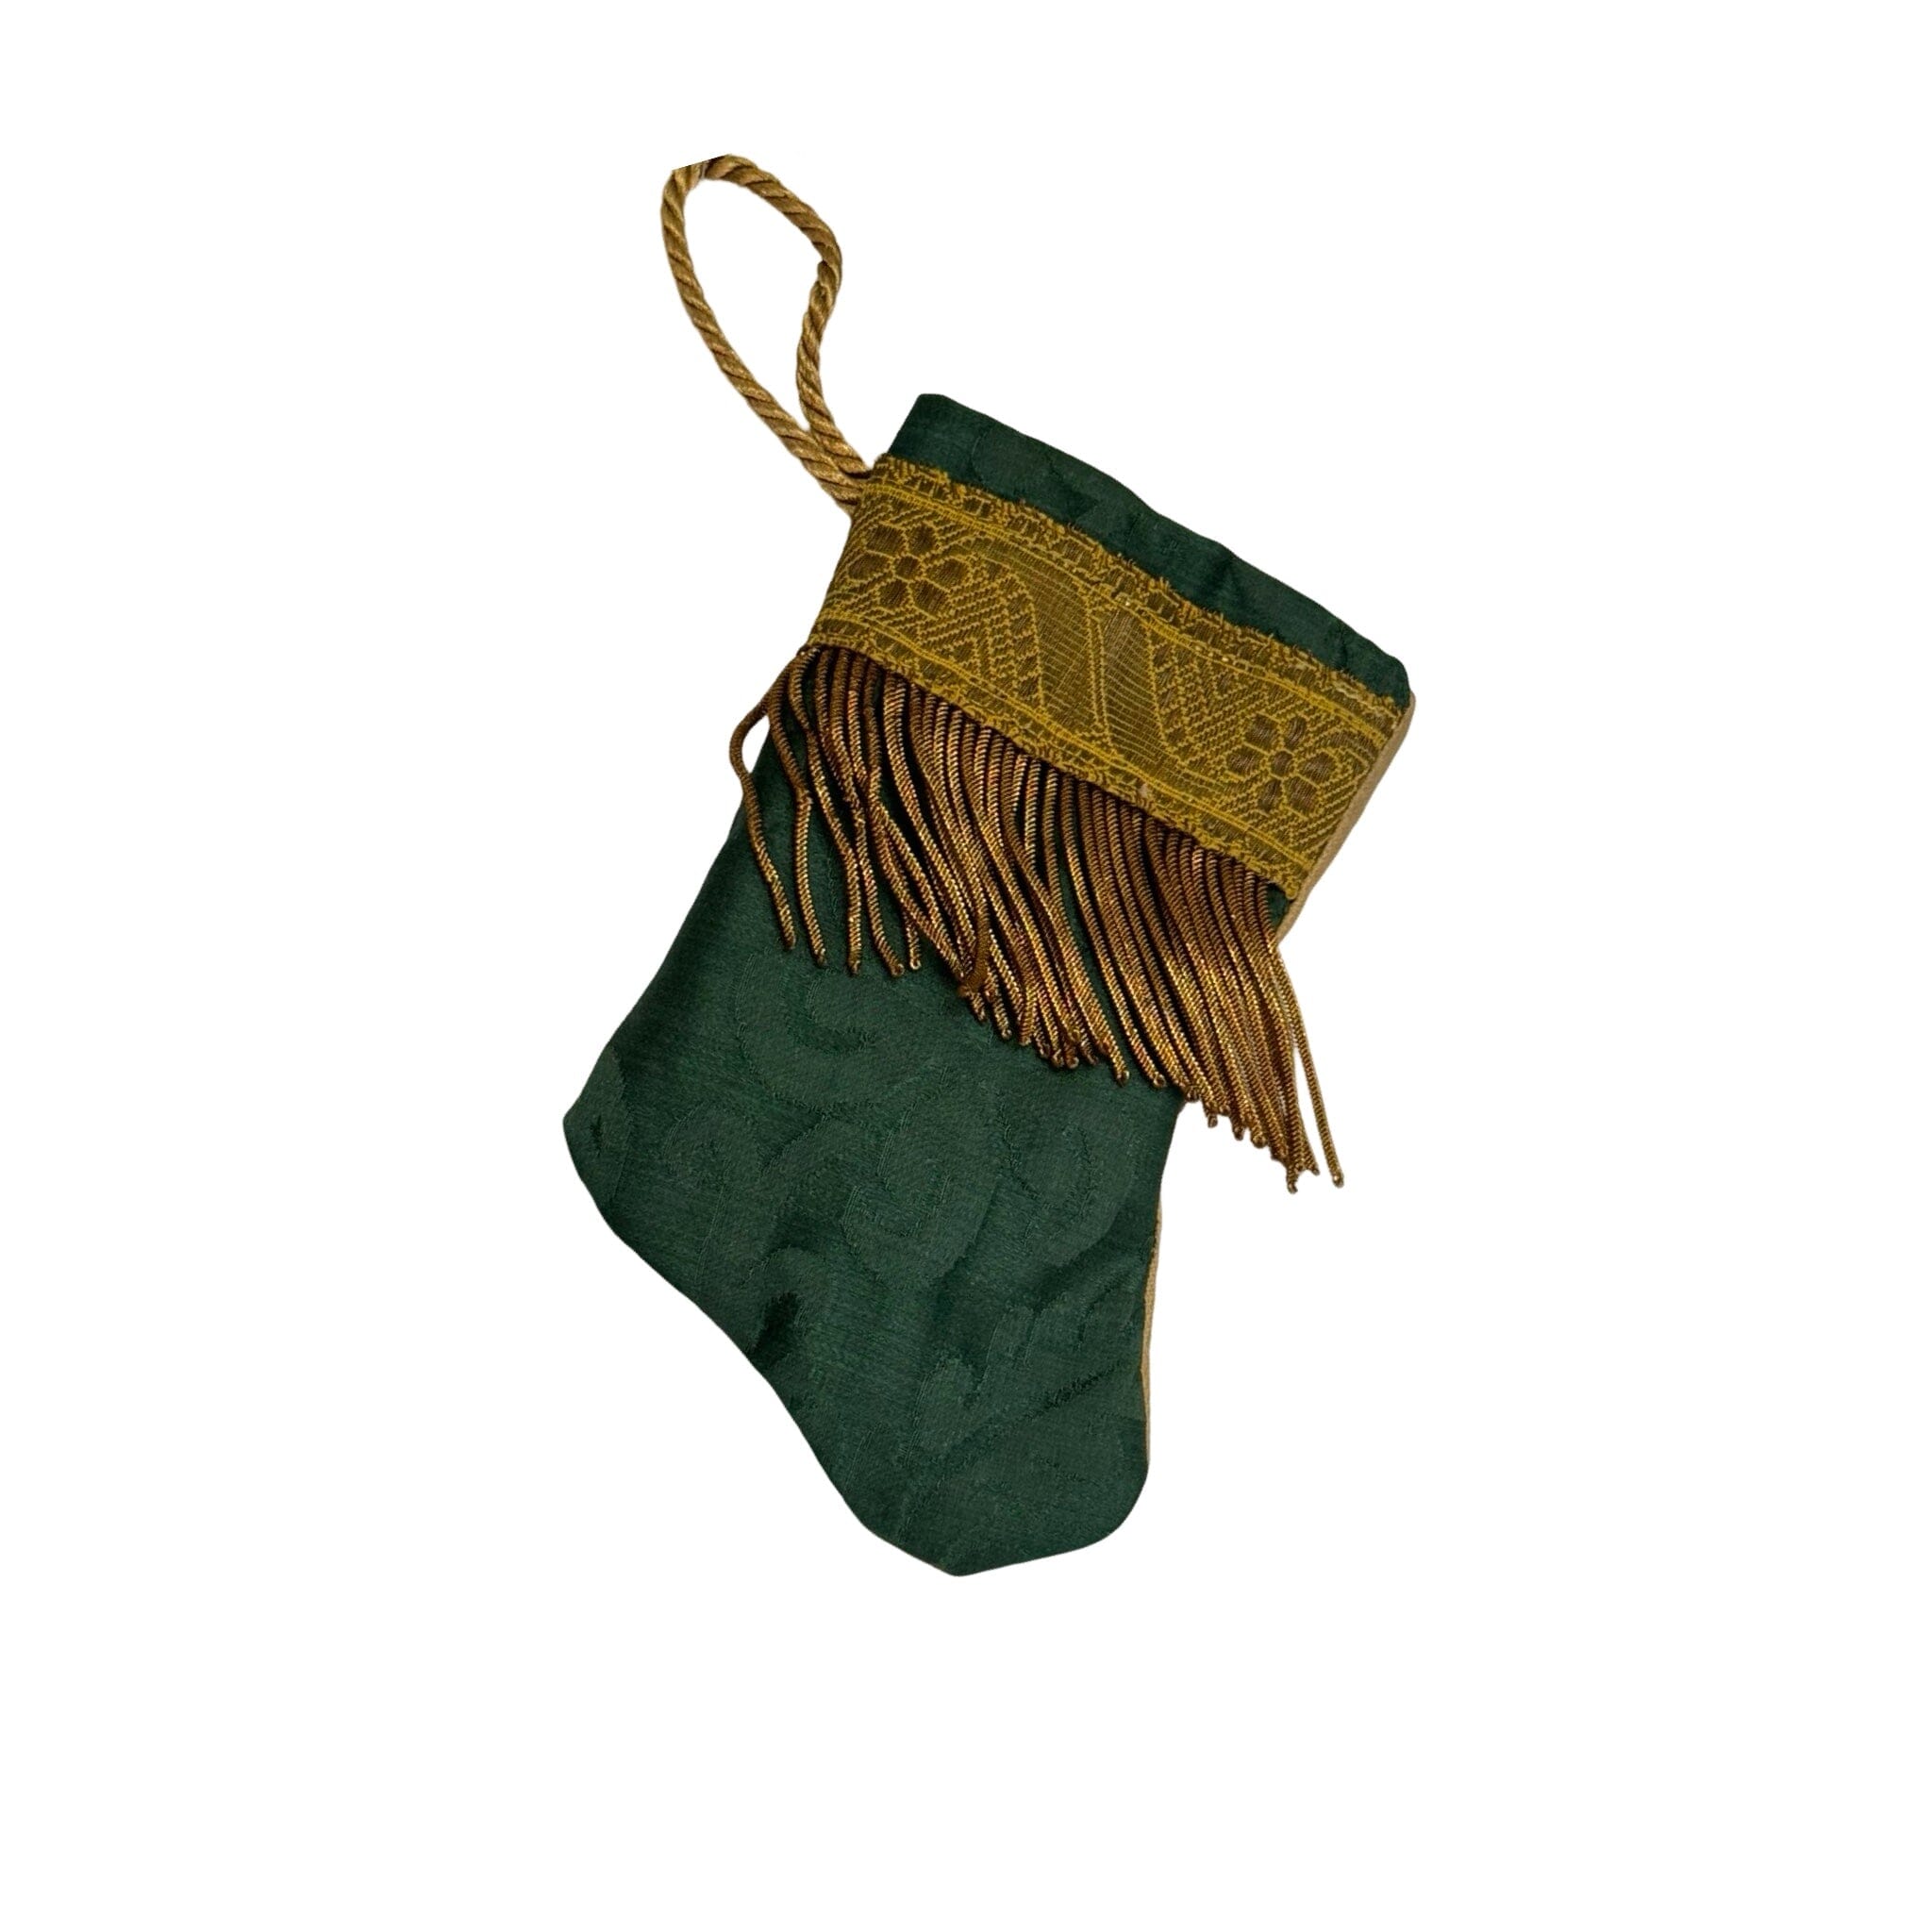 Handmade Mini Stocking Made From Vintage Fabric and Trims- Emerald Green Ornament B. Viz Design H 